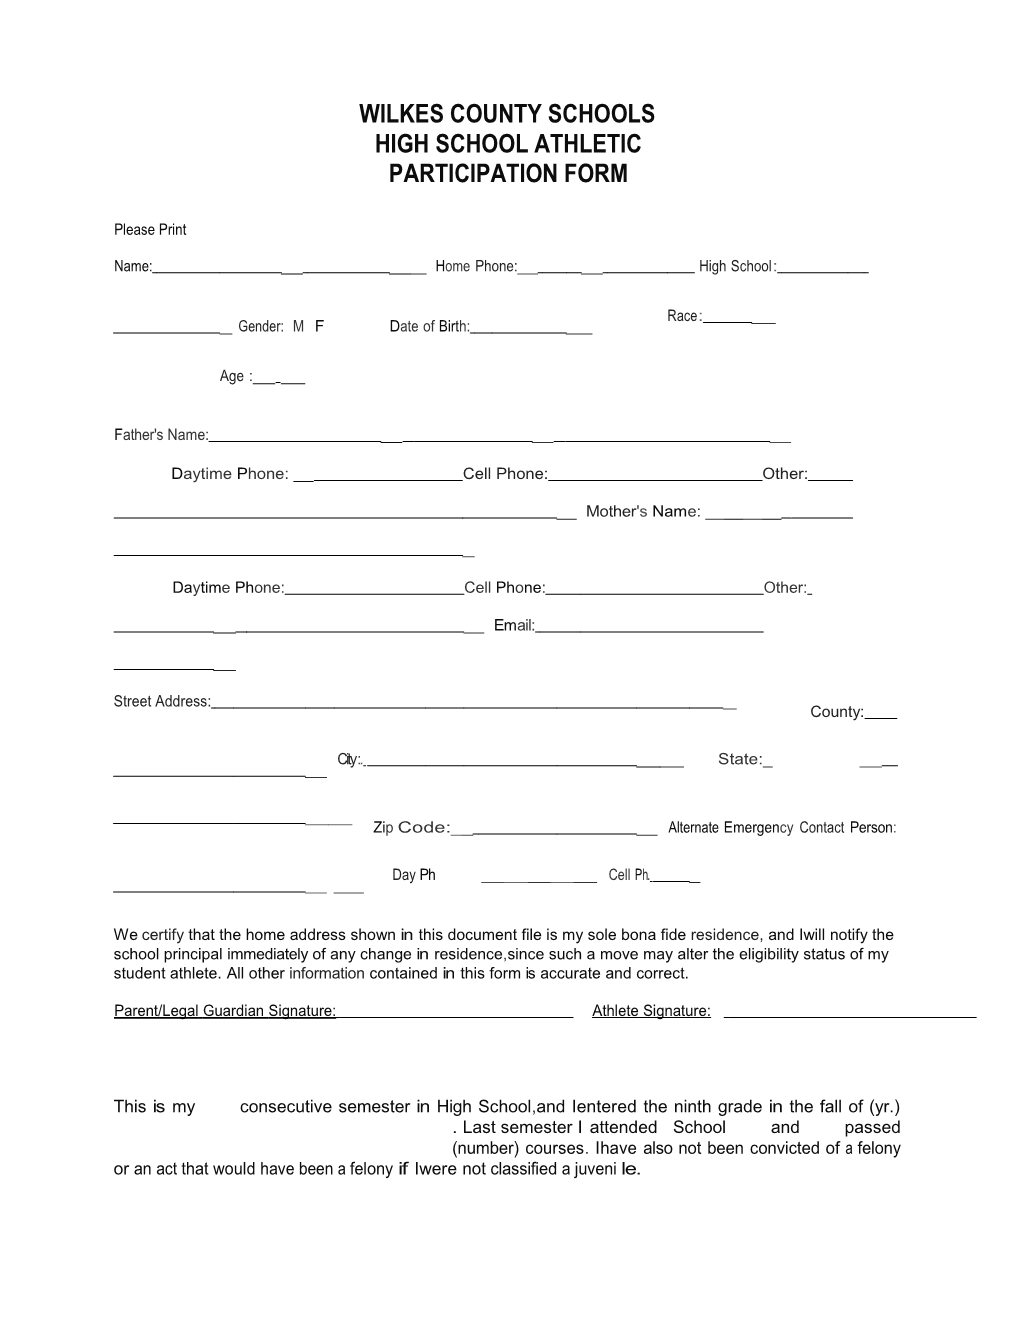 High School Athletic Participation Form